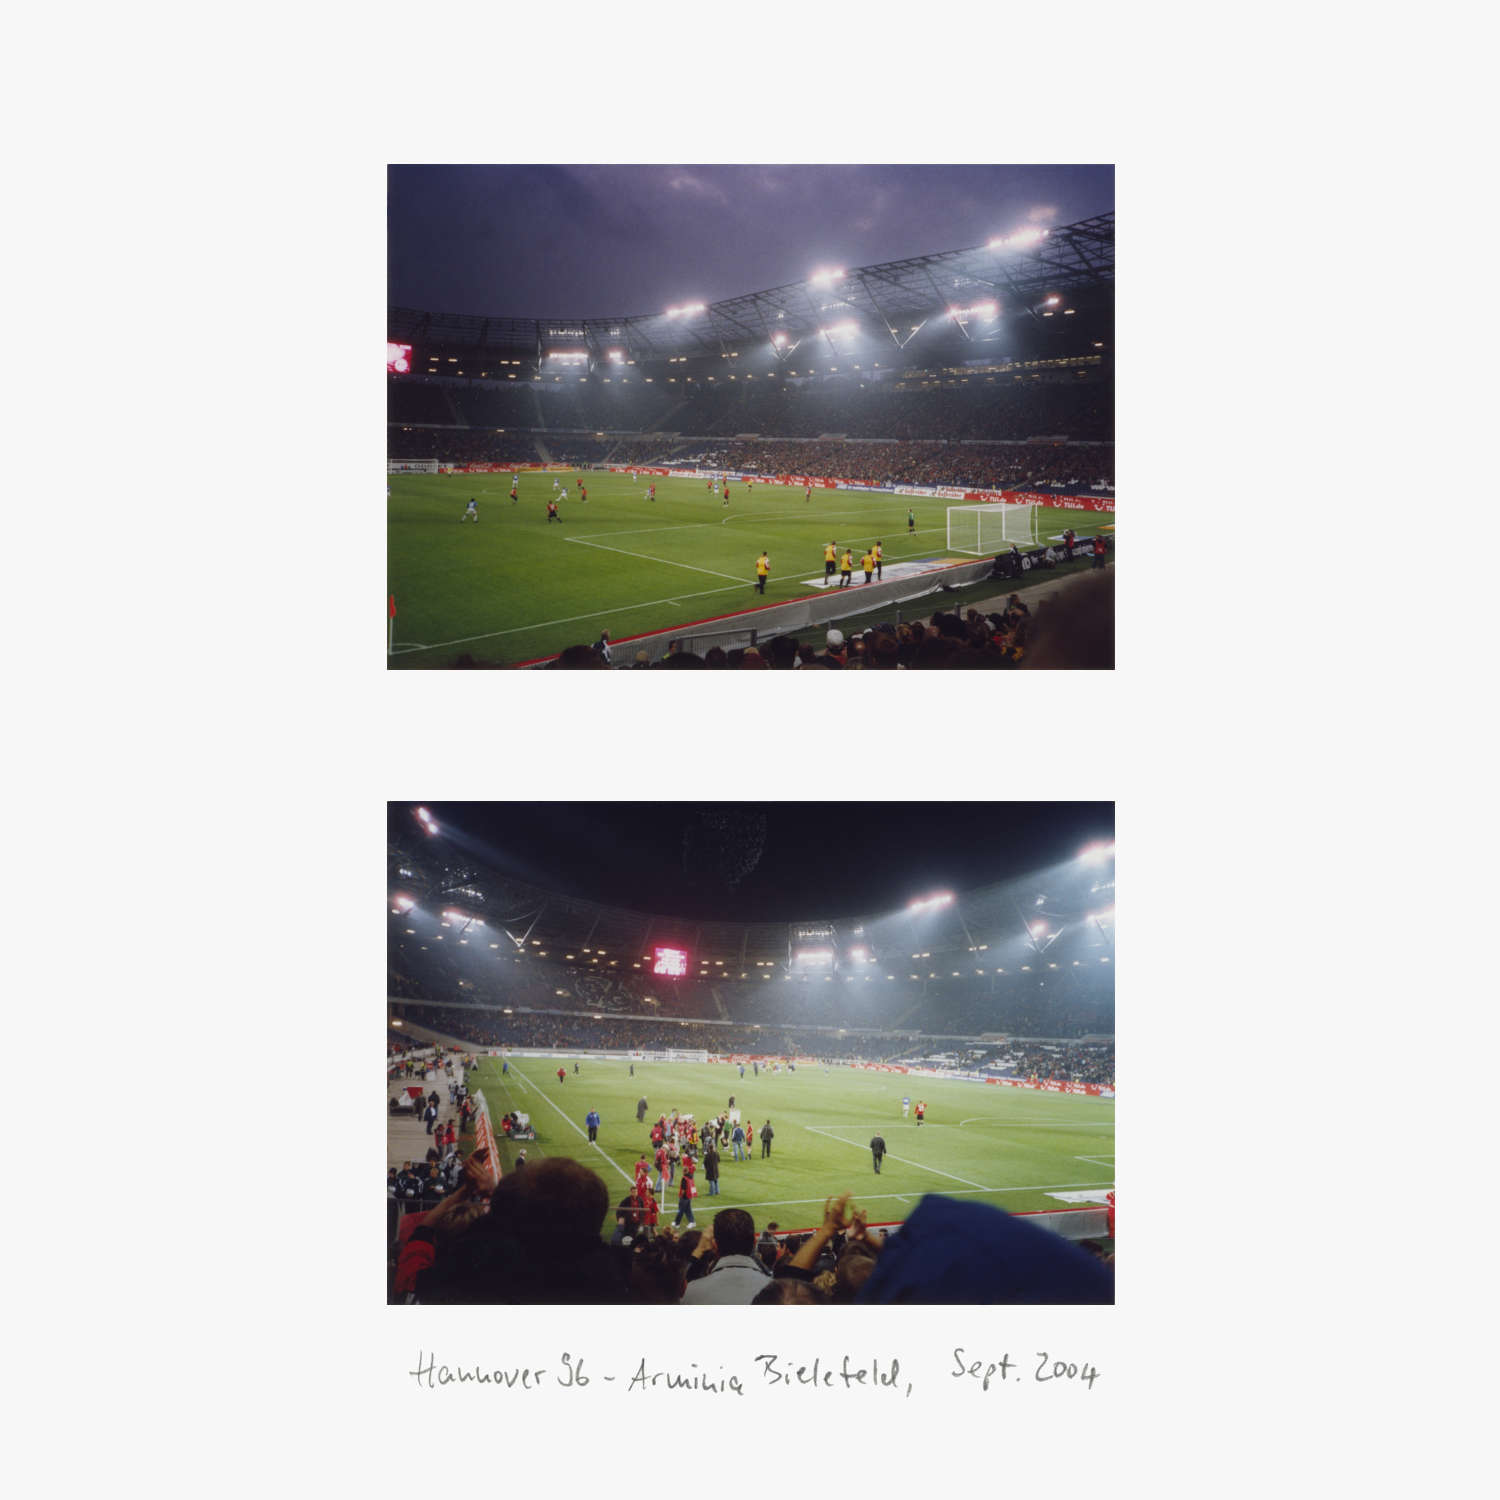 Hannover 96 - Arminia Bielefeld, September 2004